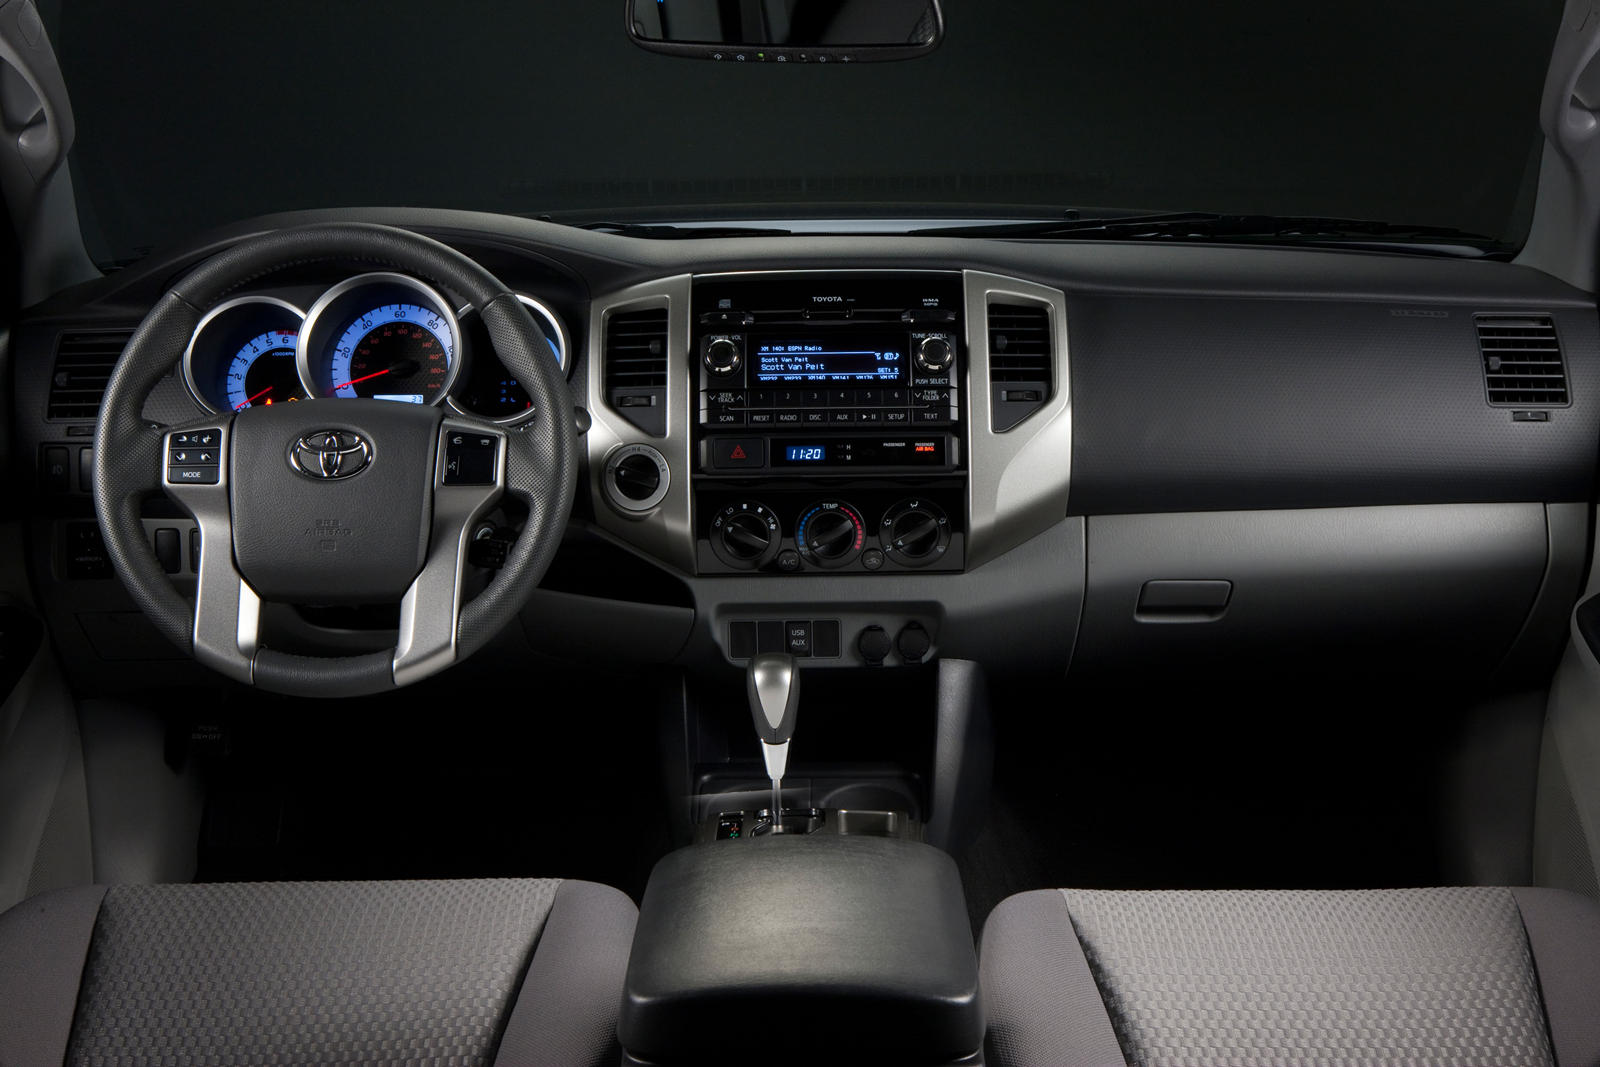 2015 Toyota Tacoma Infotainment System